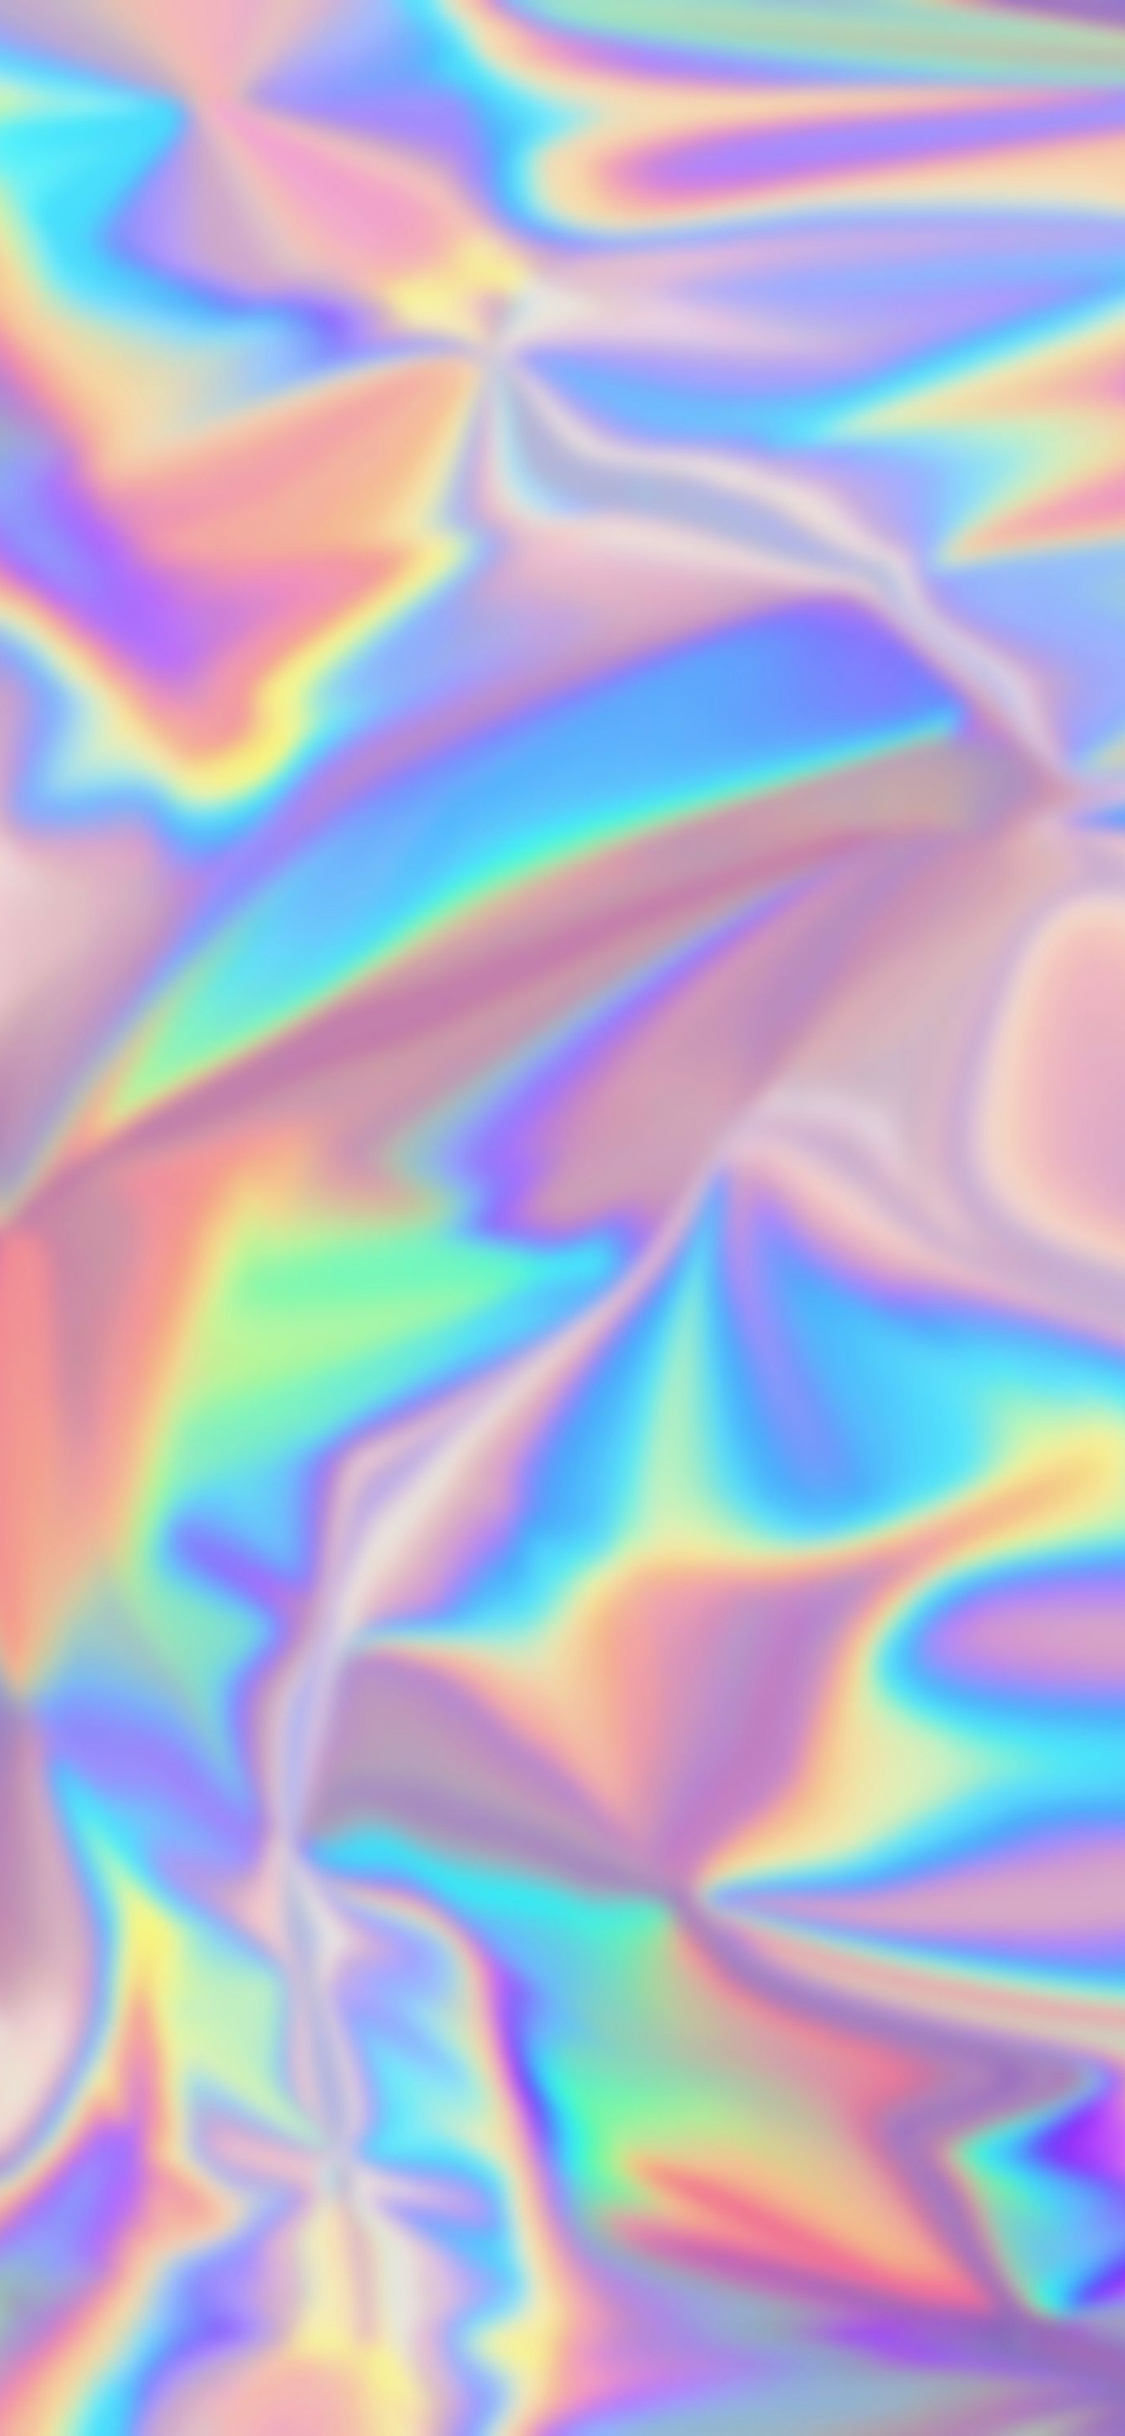 Free download Vaporwave aesthetic in 2019 Colorful wallpaper [1590x3000] for your Desktop, Mobile & Tablet. Explore Jada Background. Jada Background, Jada Pinkett Smith Wallpaper, Jada Pinkett Smith Wallpaper